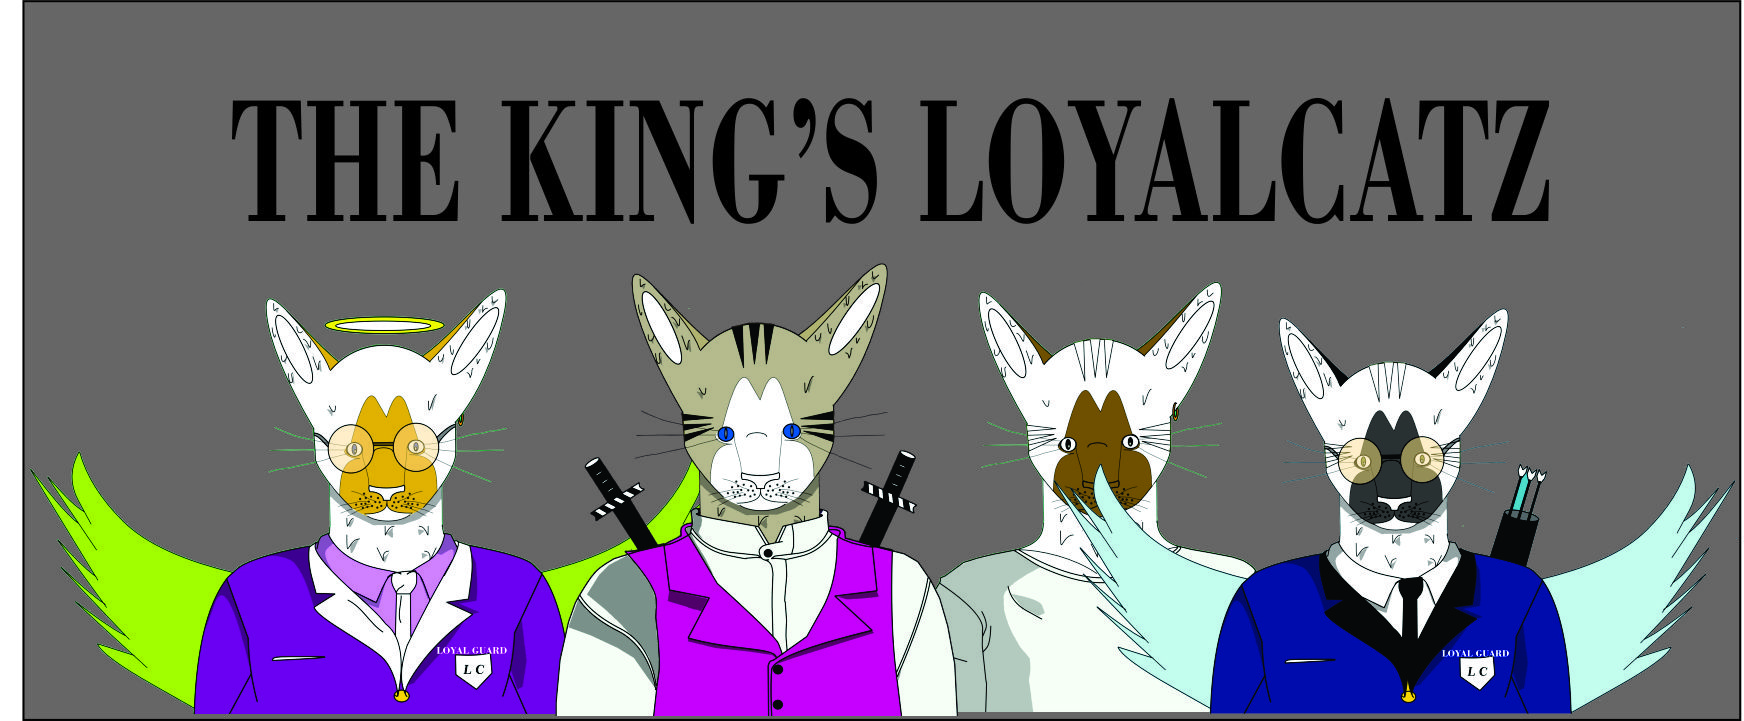 THE KING'S LOYALCATZ